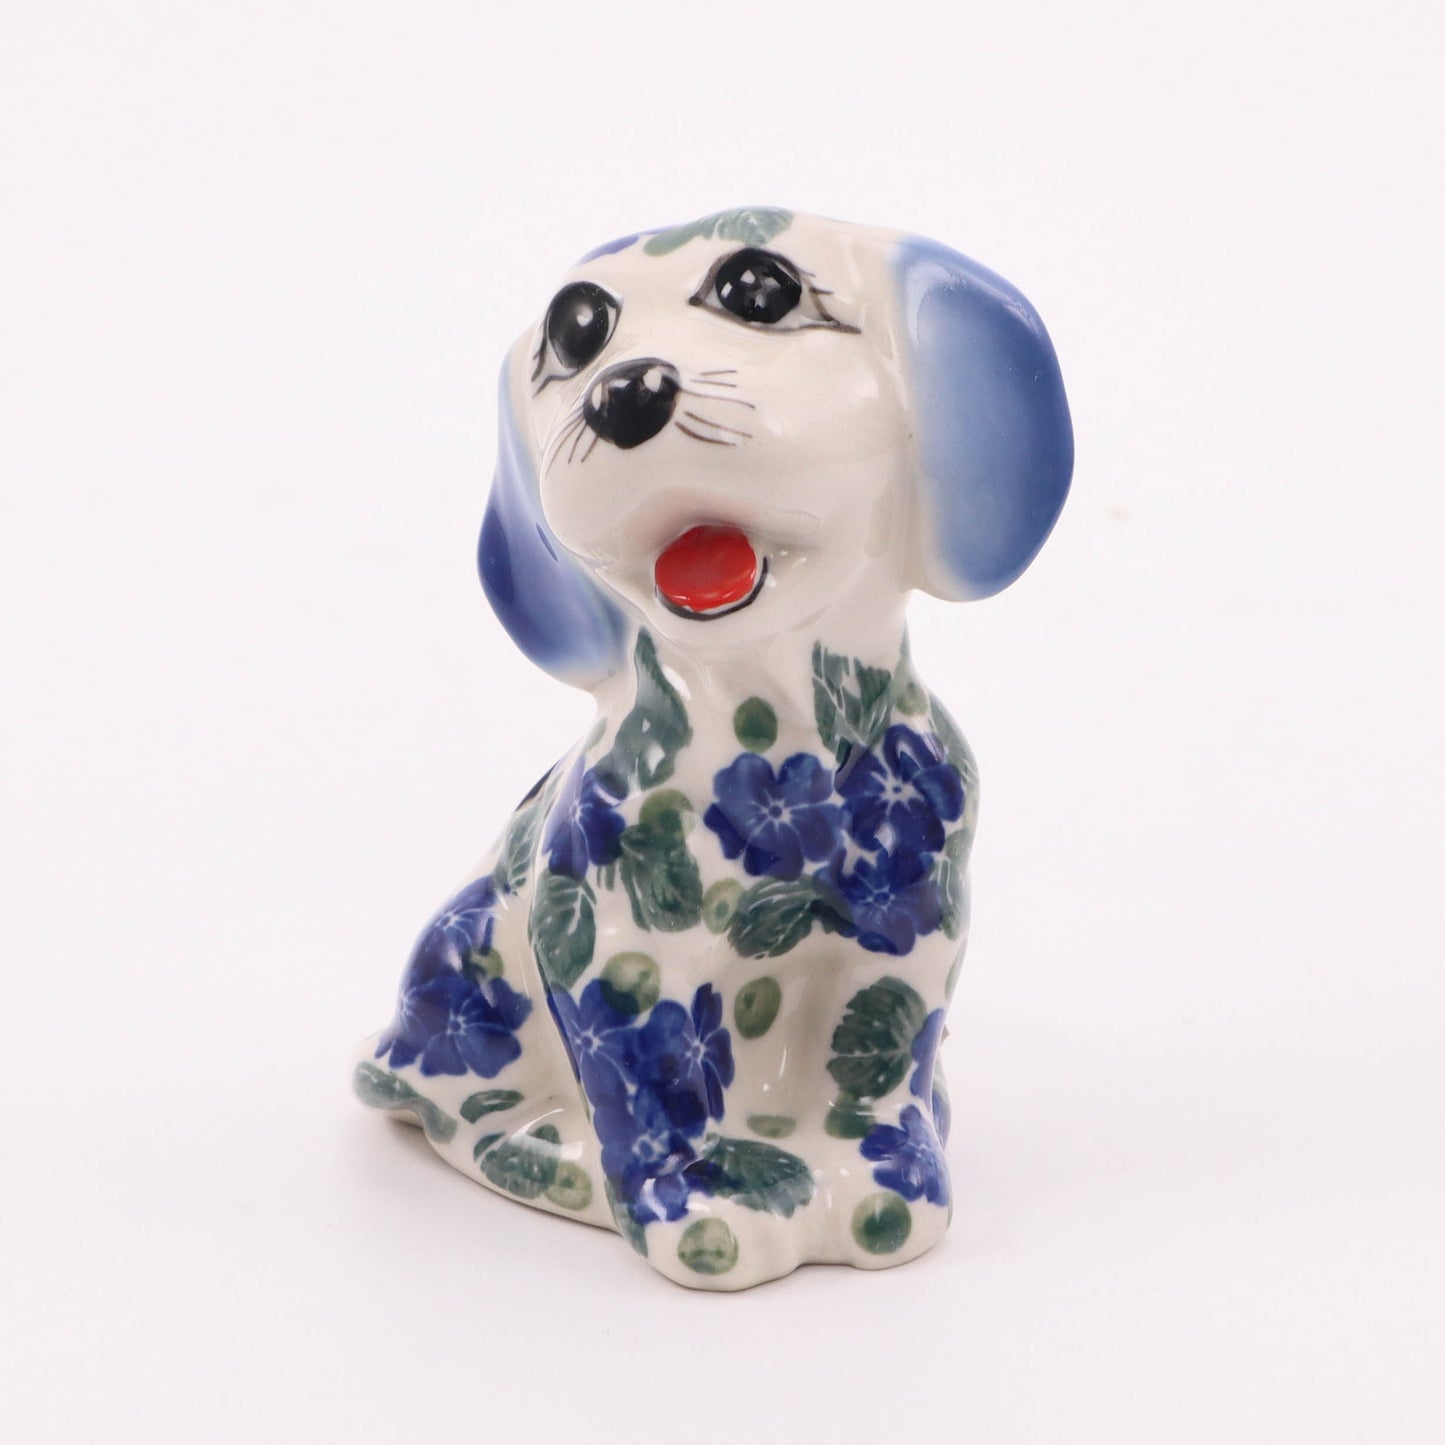 2"x3" Puppy Figurine. Pattern: Blue Daisy